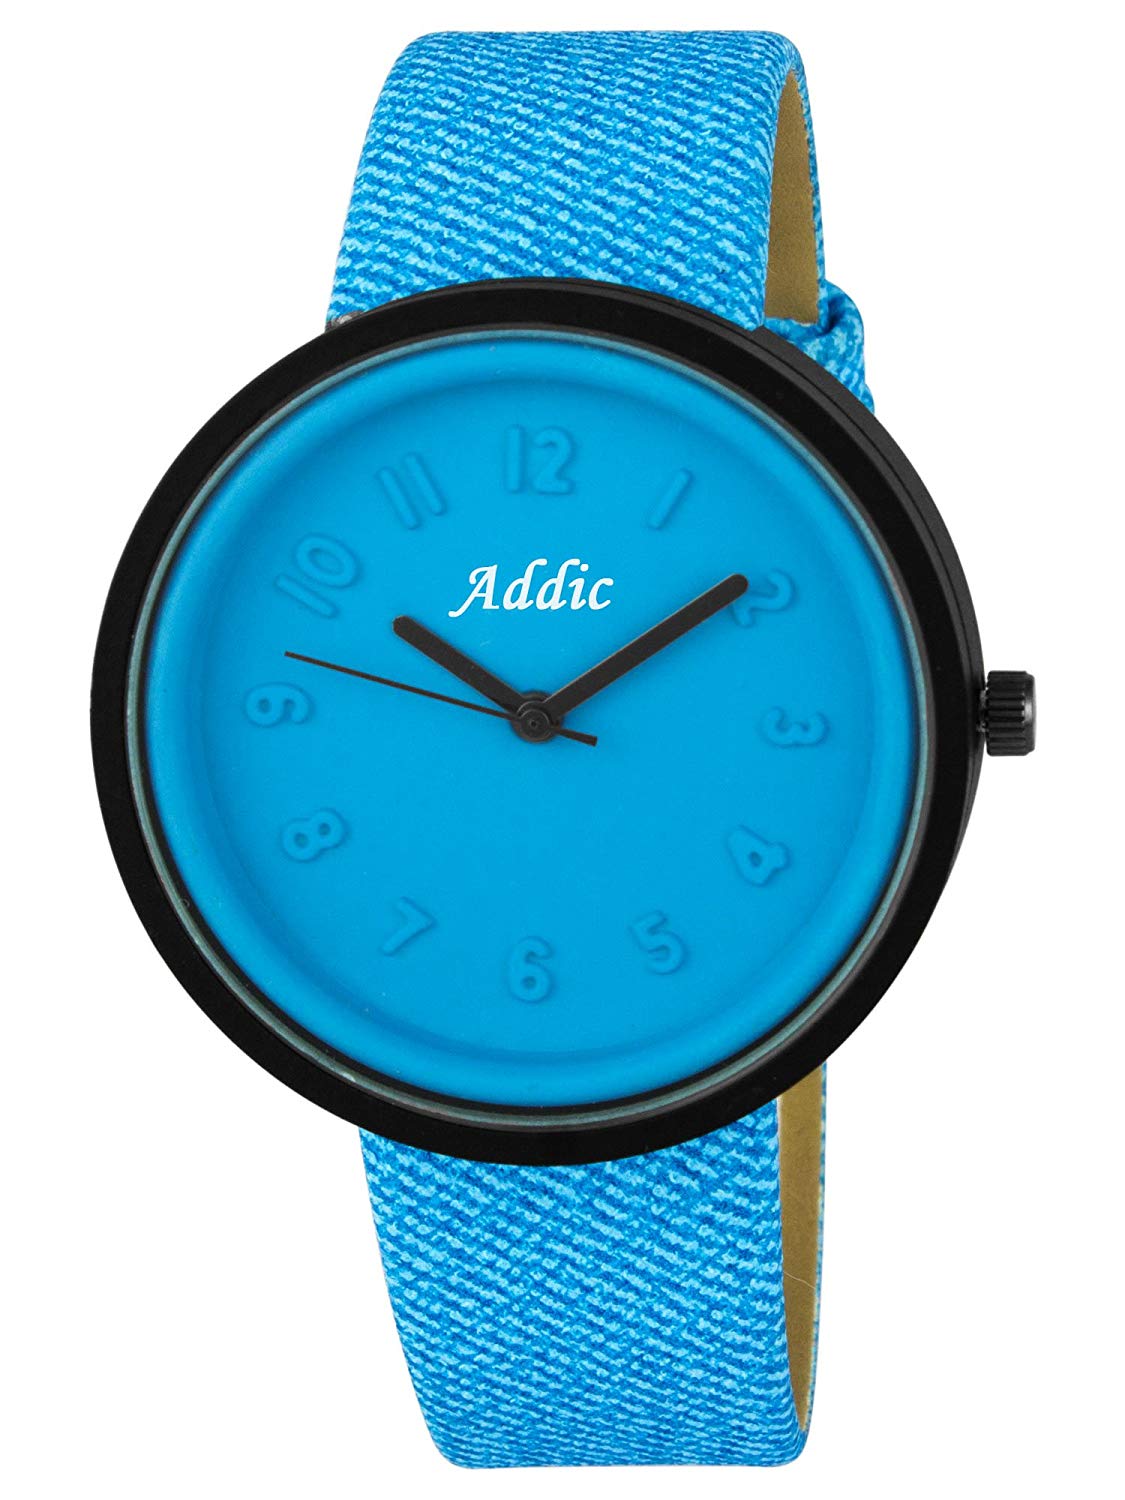 Addic Stylesh Analog White Dial Watch for Men. | White dial watch, Watches  for men, Watches